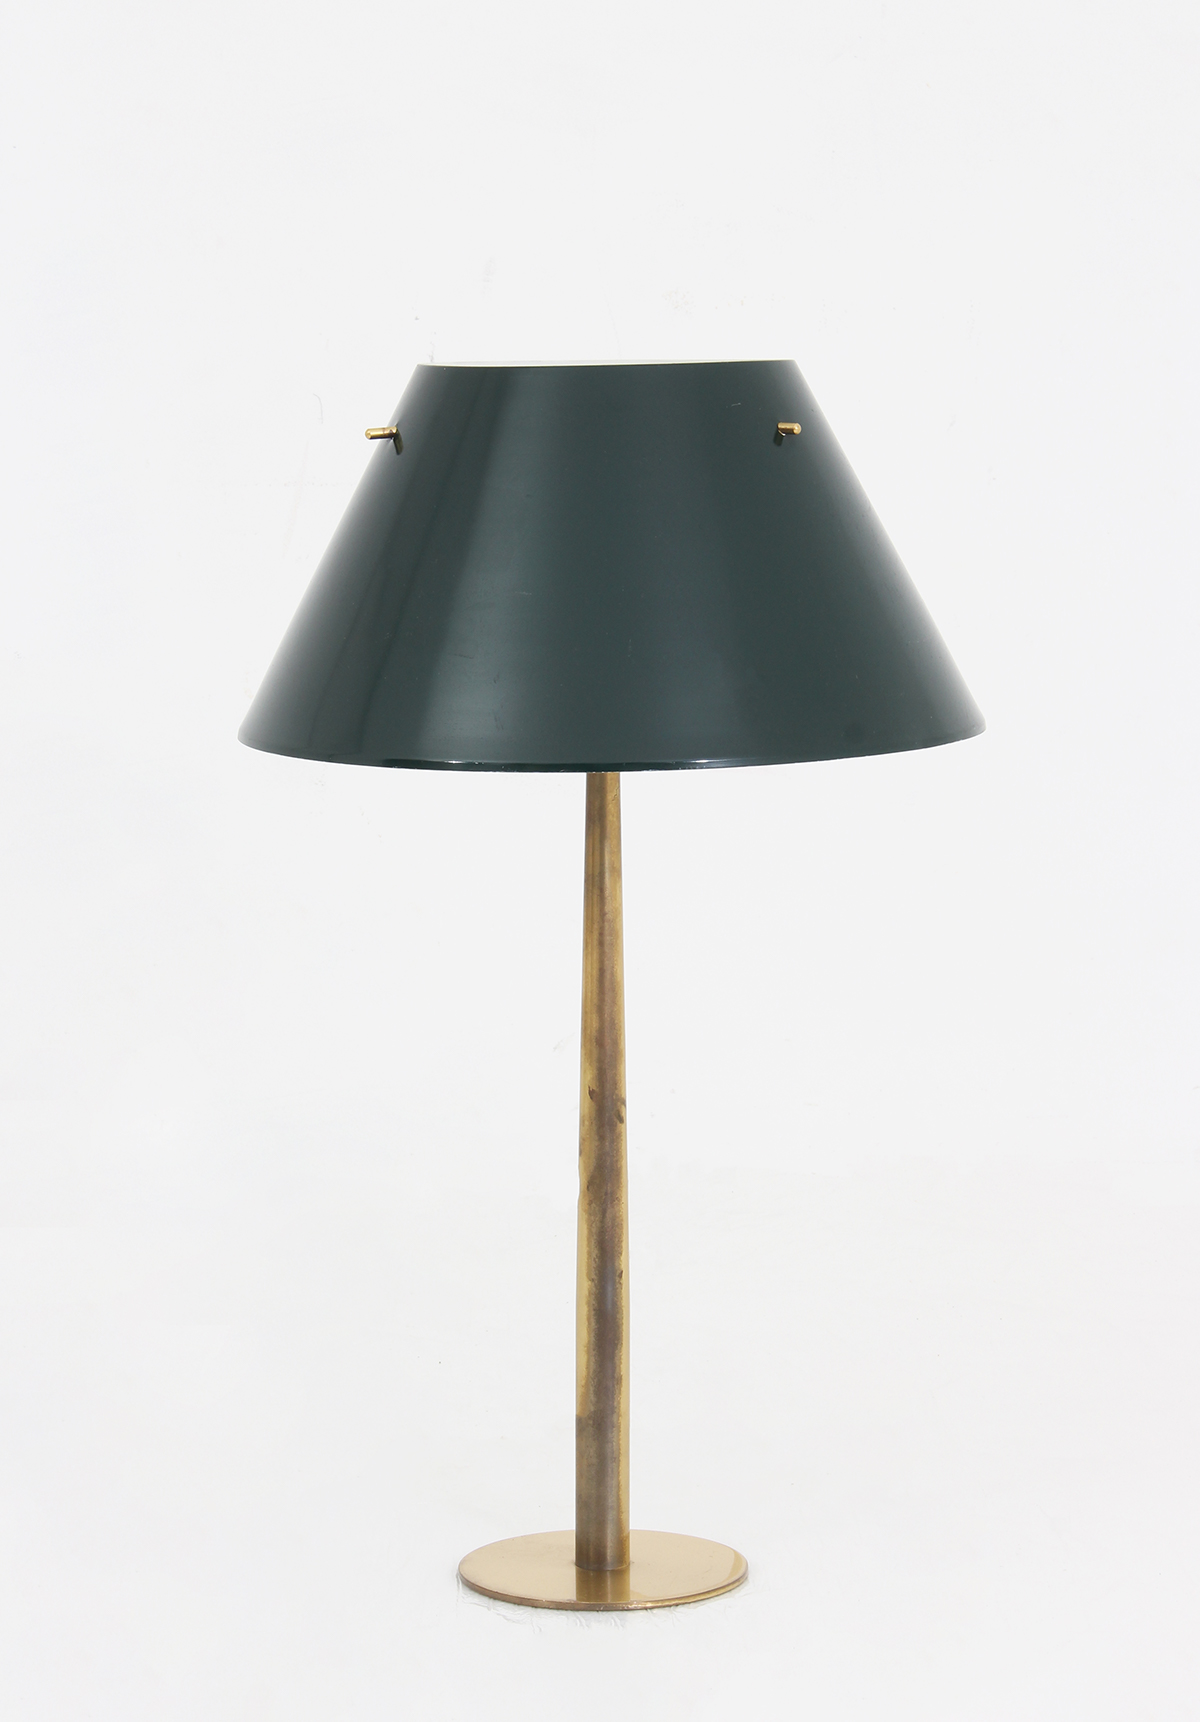 Model B105 Table Lamp Dimoregallery, Hans Agne Jakobsson Table Lamp